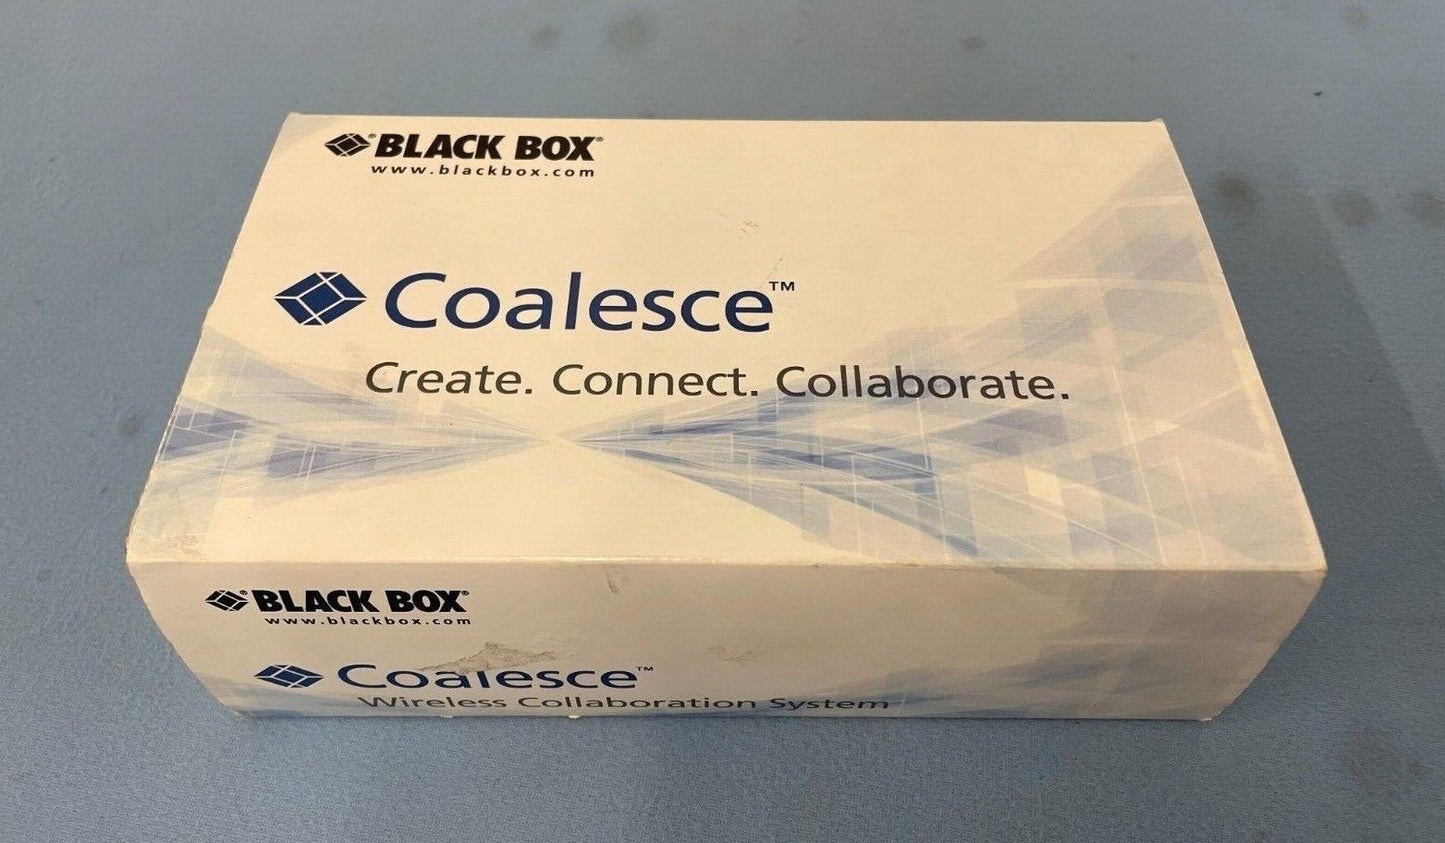 Coalesce Black Box Video Conferencing Wireless Collaboration System WC-COA